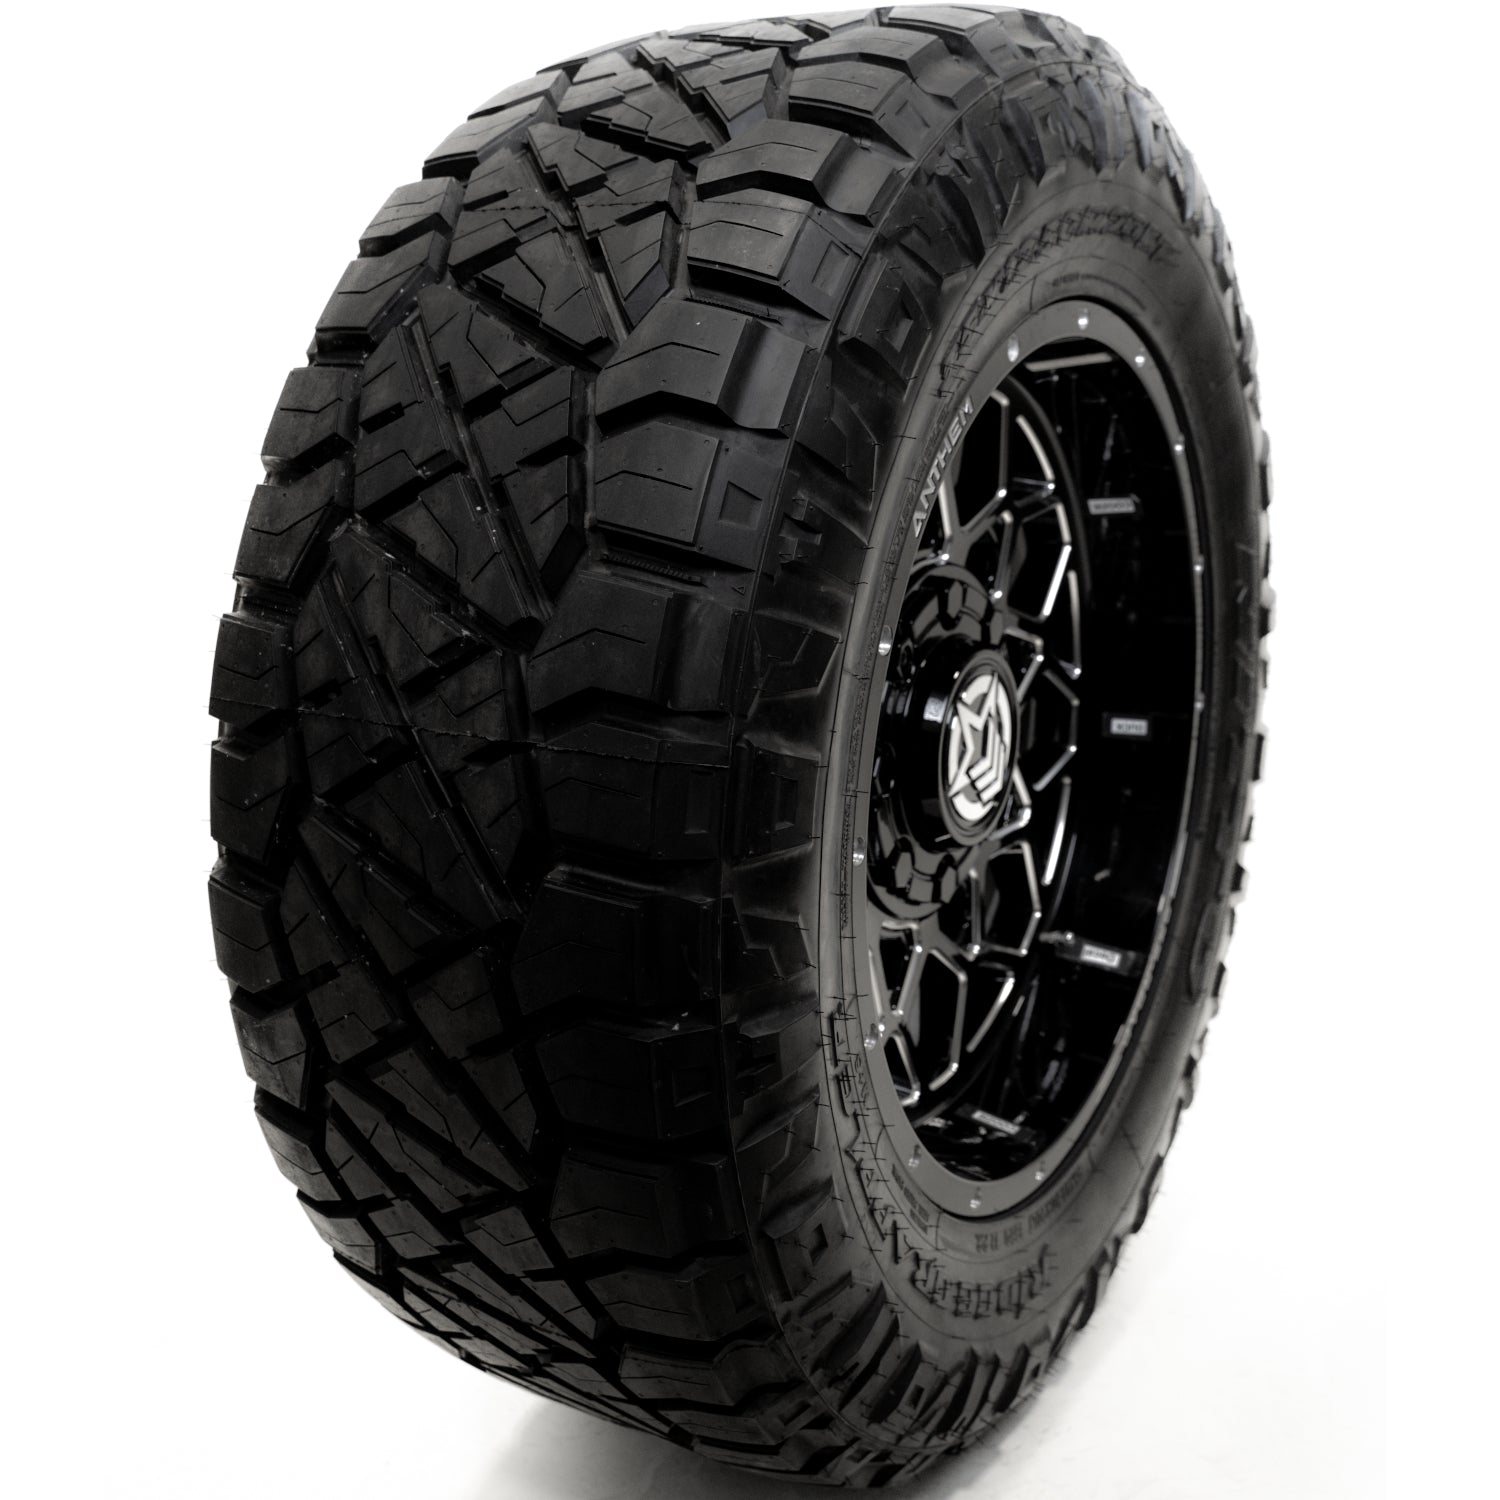 NITTO RIDGE GRAPPLER LT35X11.50R17 Tires